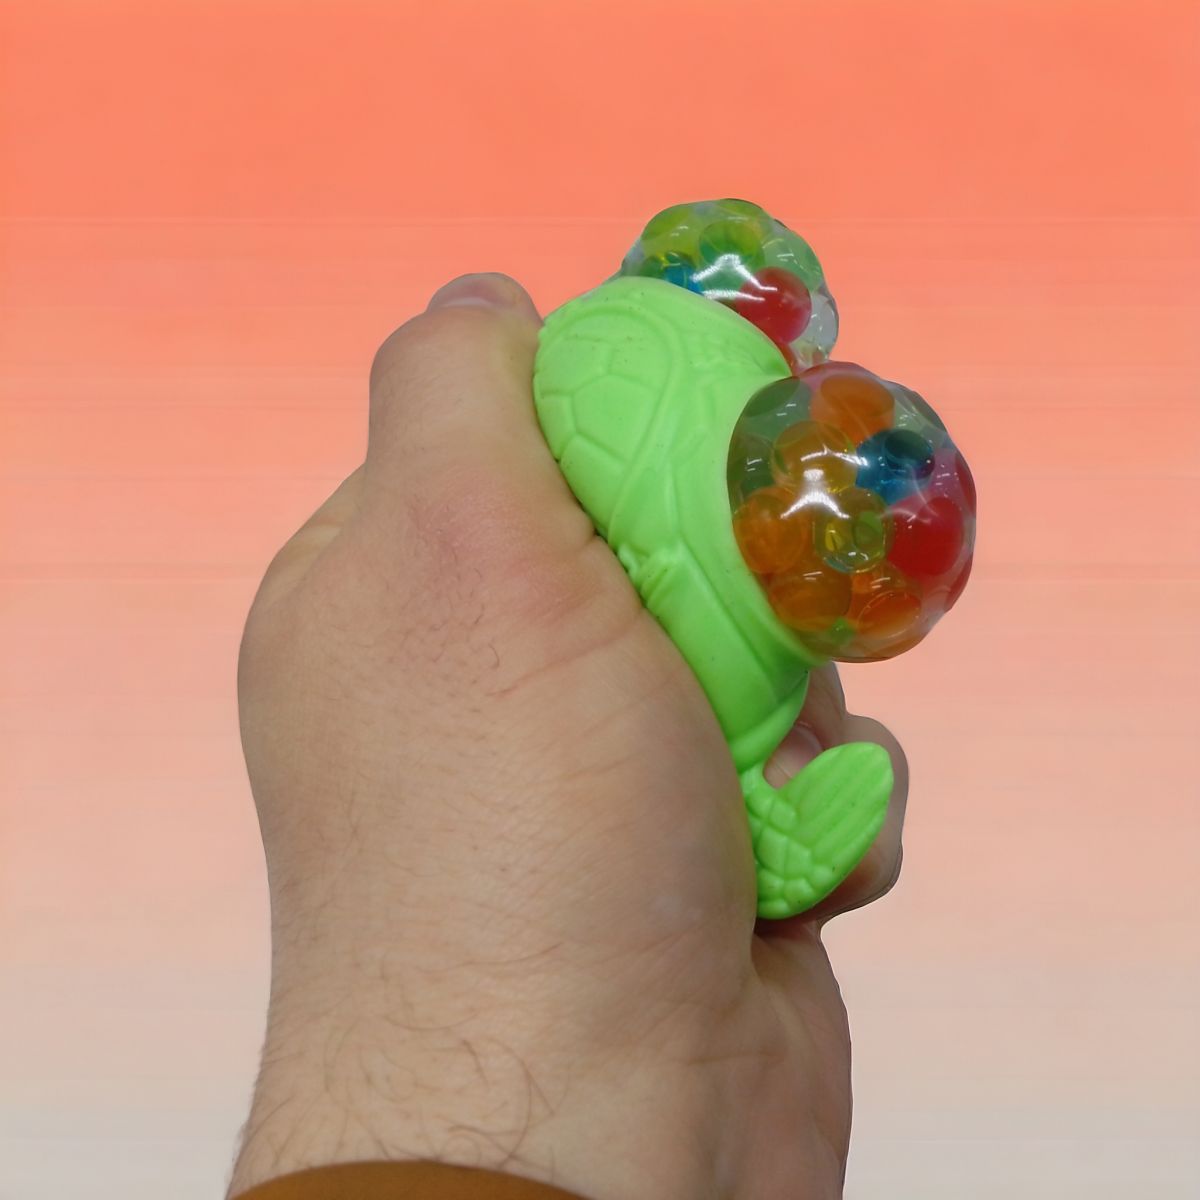 Іграшка-антистрес "Черепаха" (зелена)